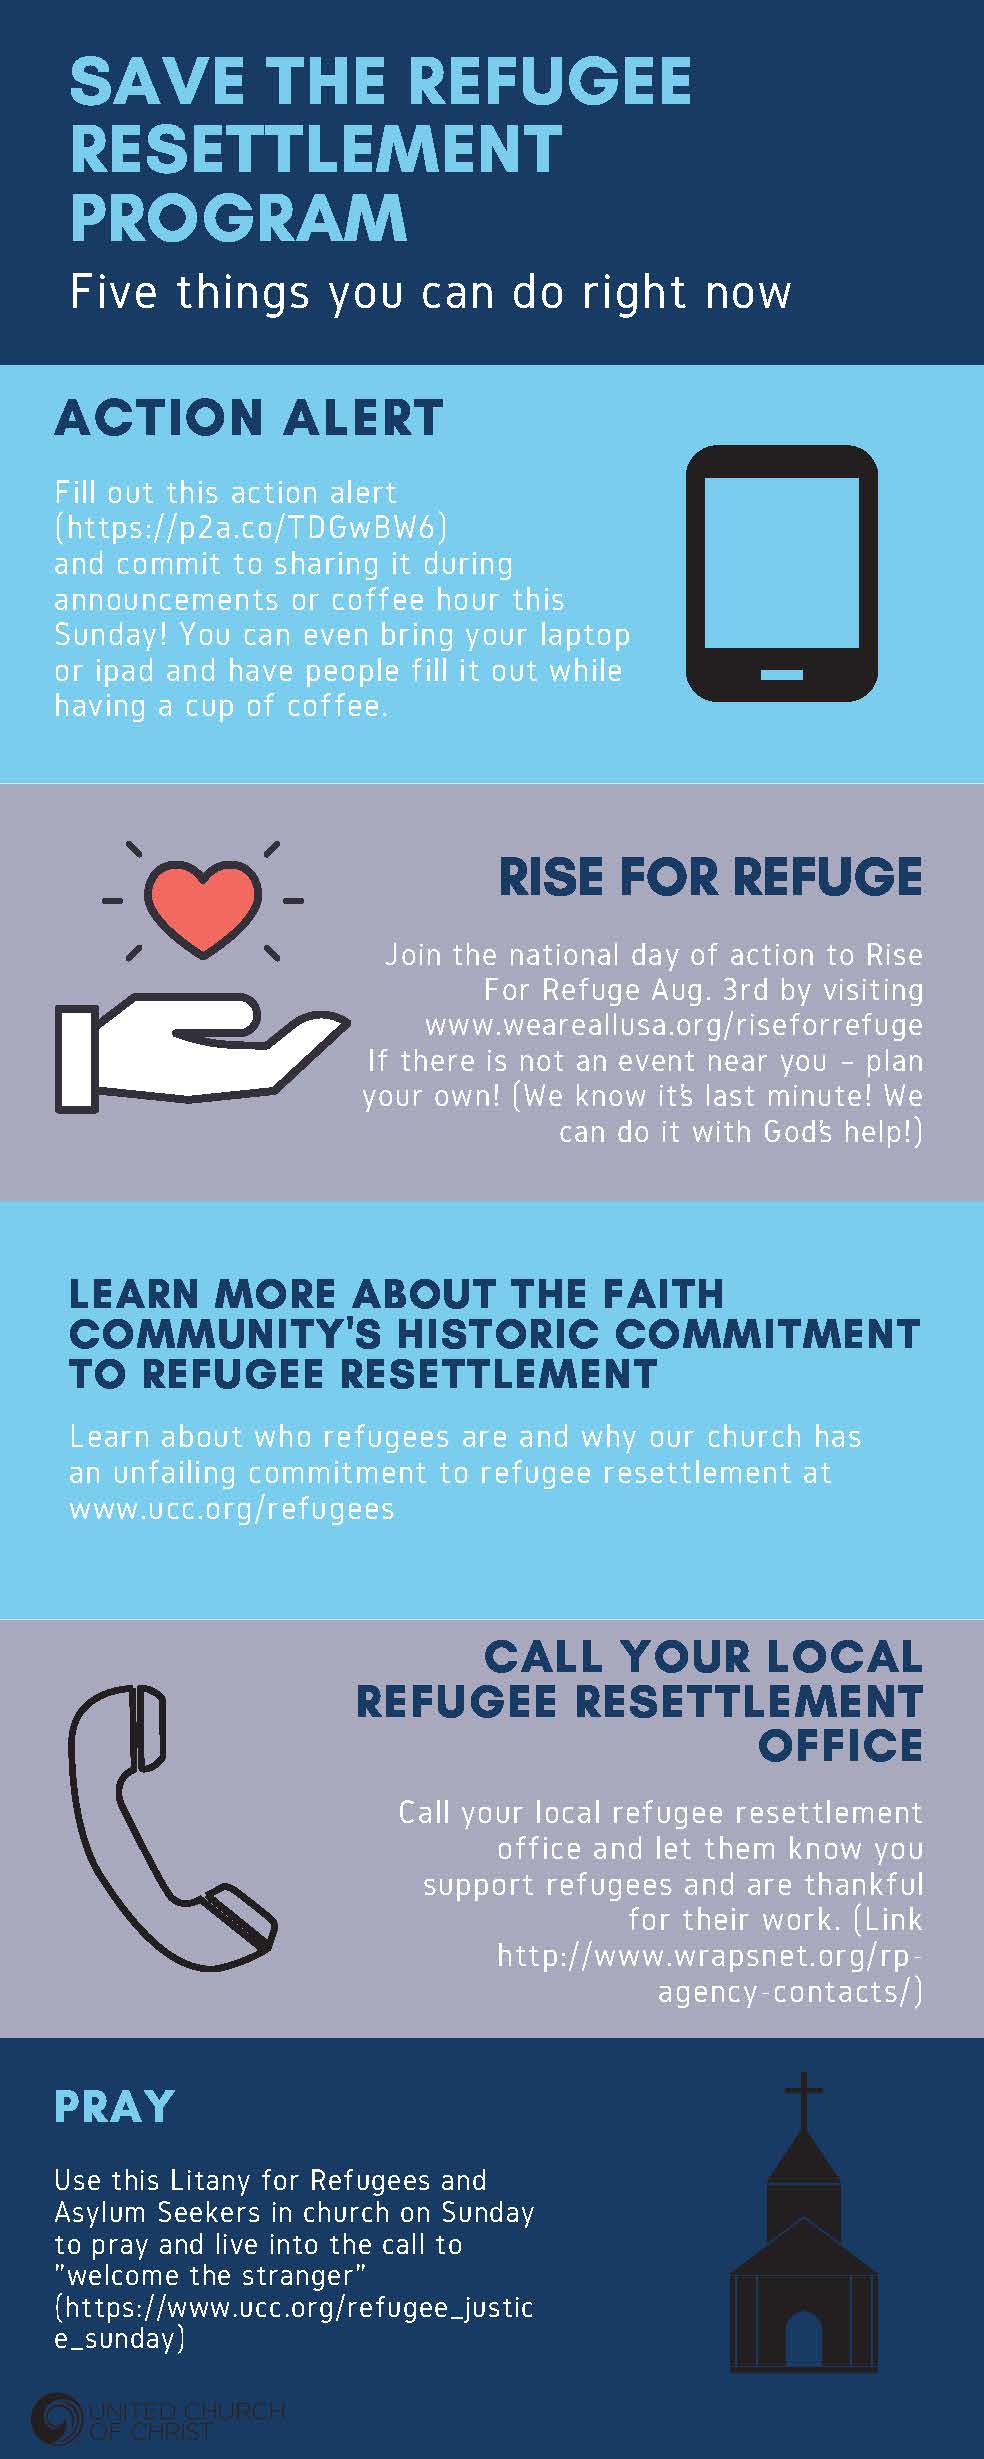 Save_the_refugee_resettlement_program_(2)_to_use.jpg